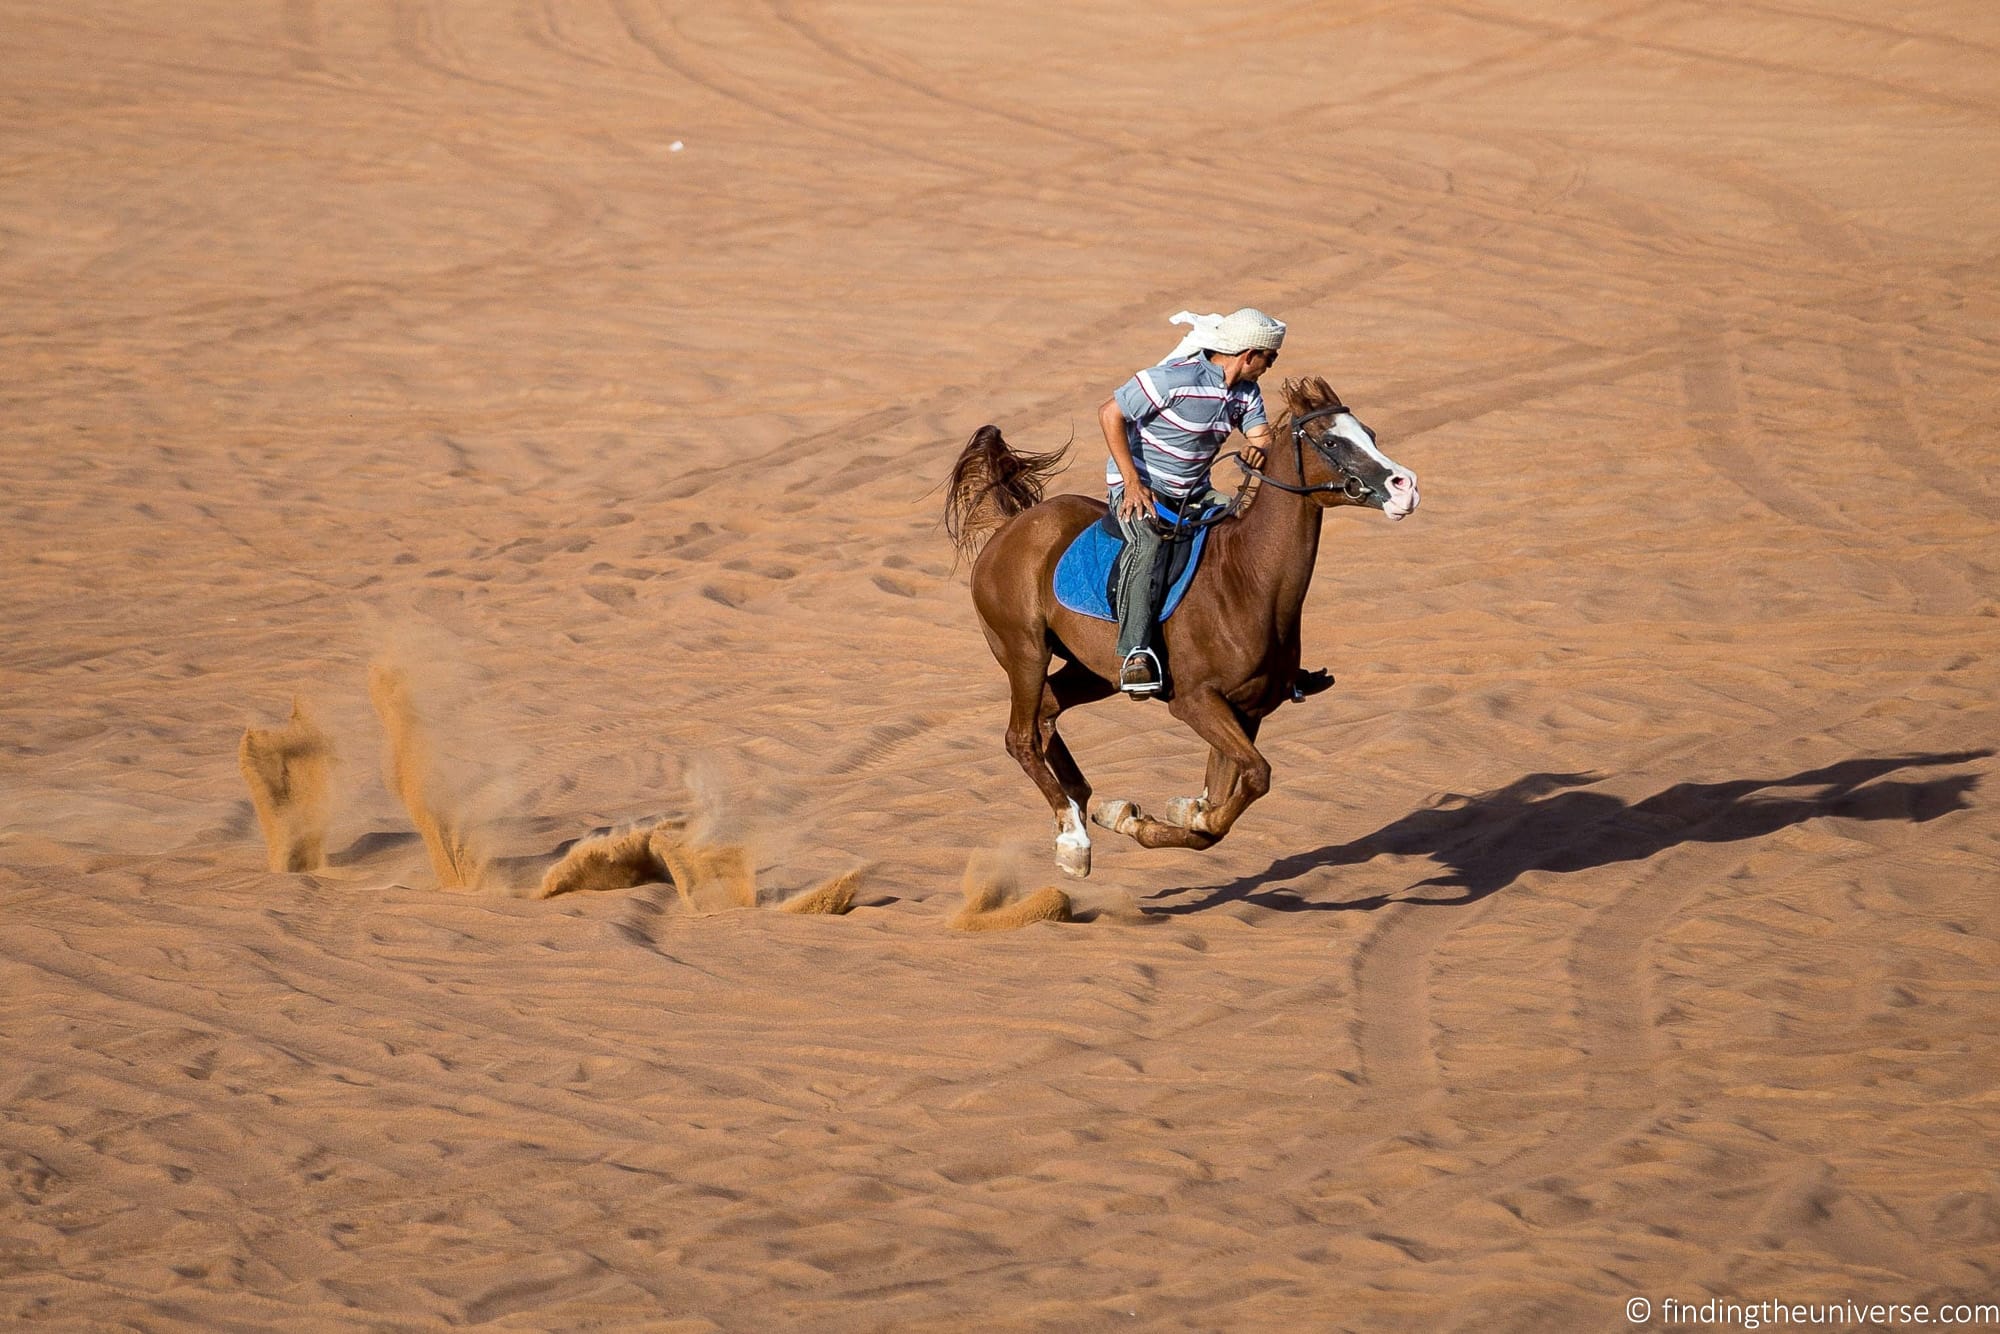 A man riding a horse in a desert in Dubai.